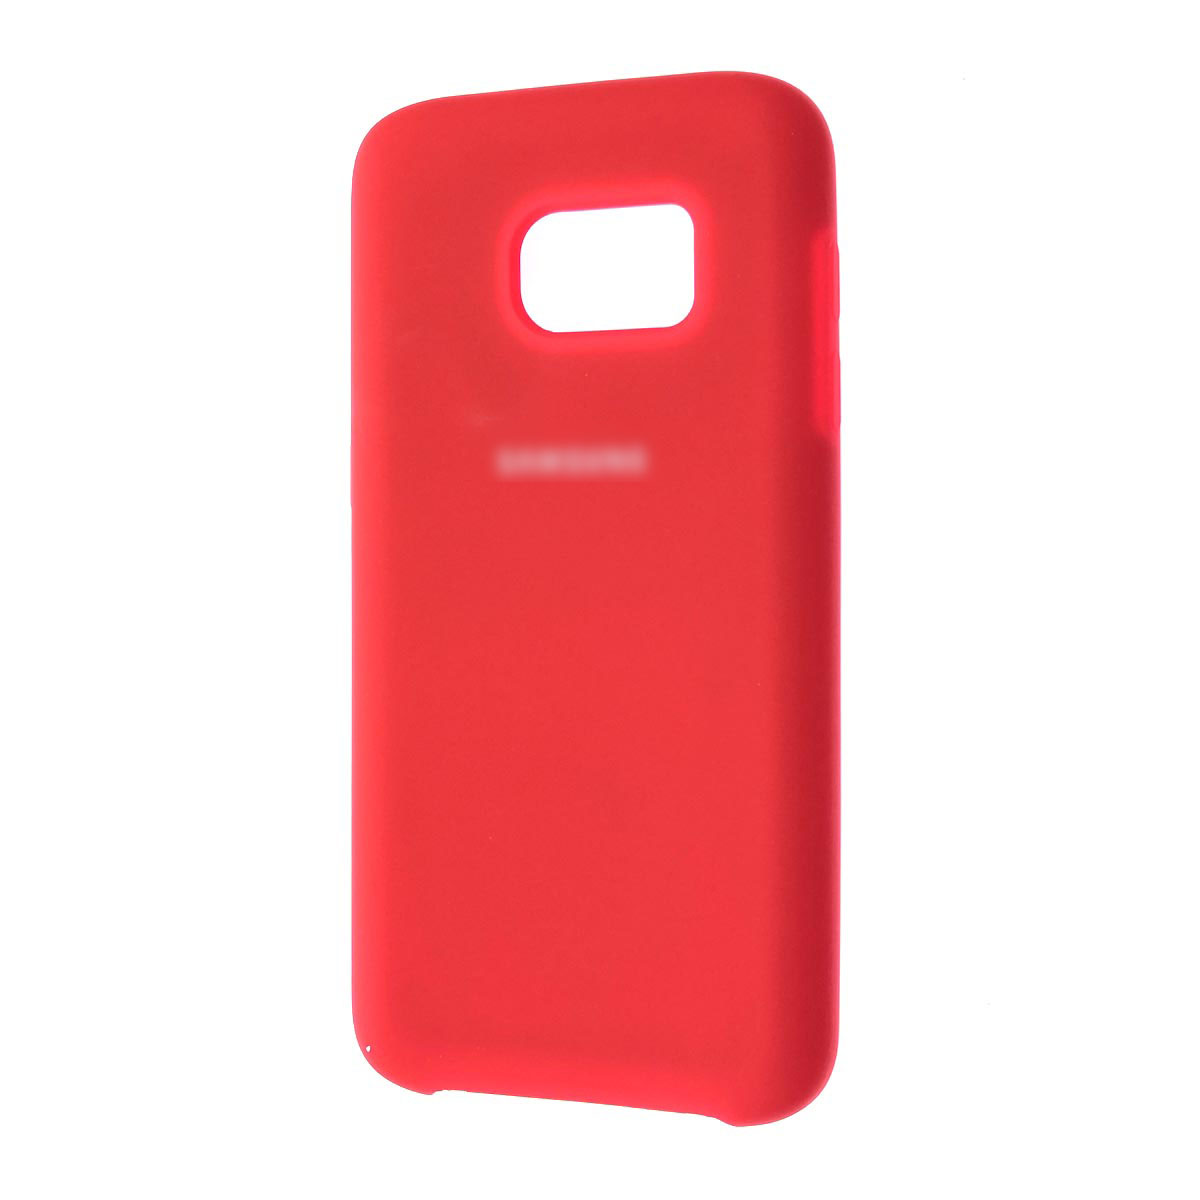 Чехол накладка Silicon Cover для SAMSUNG Galaxy S7 (SM-G930), силикон, бархат, цвет красный